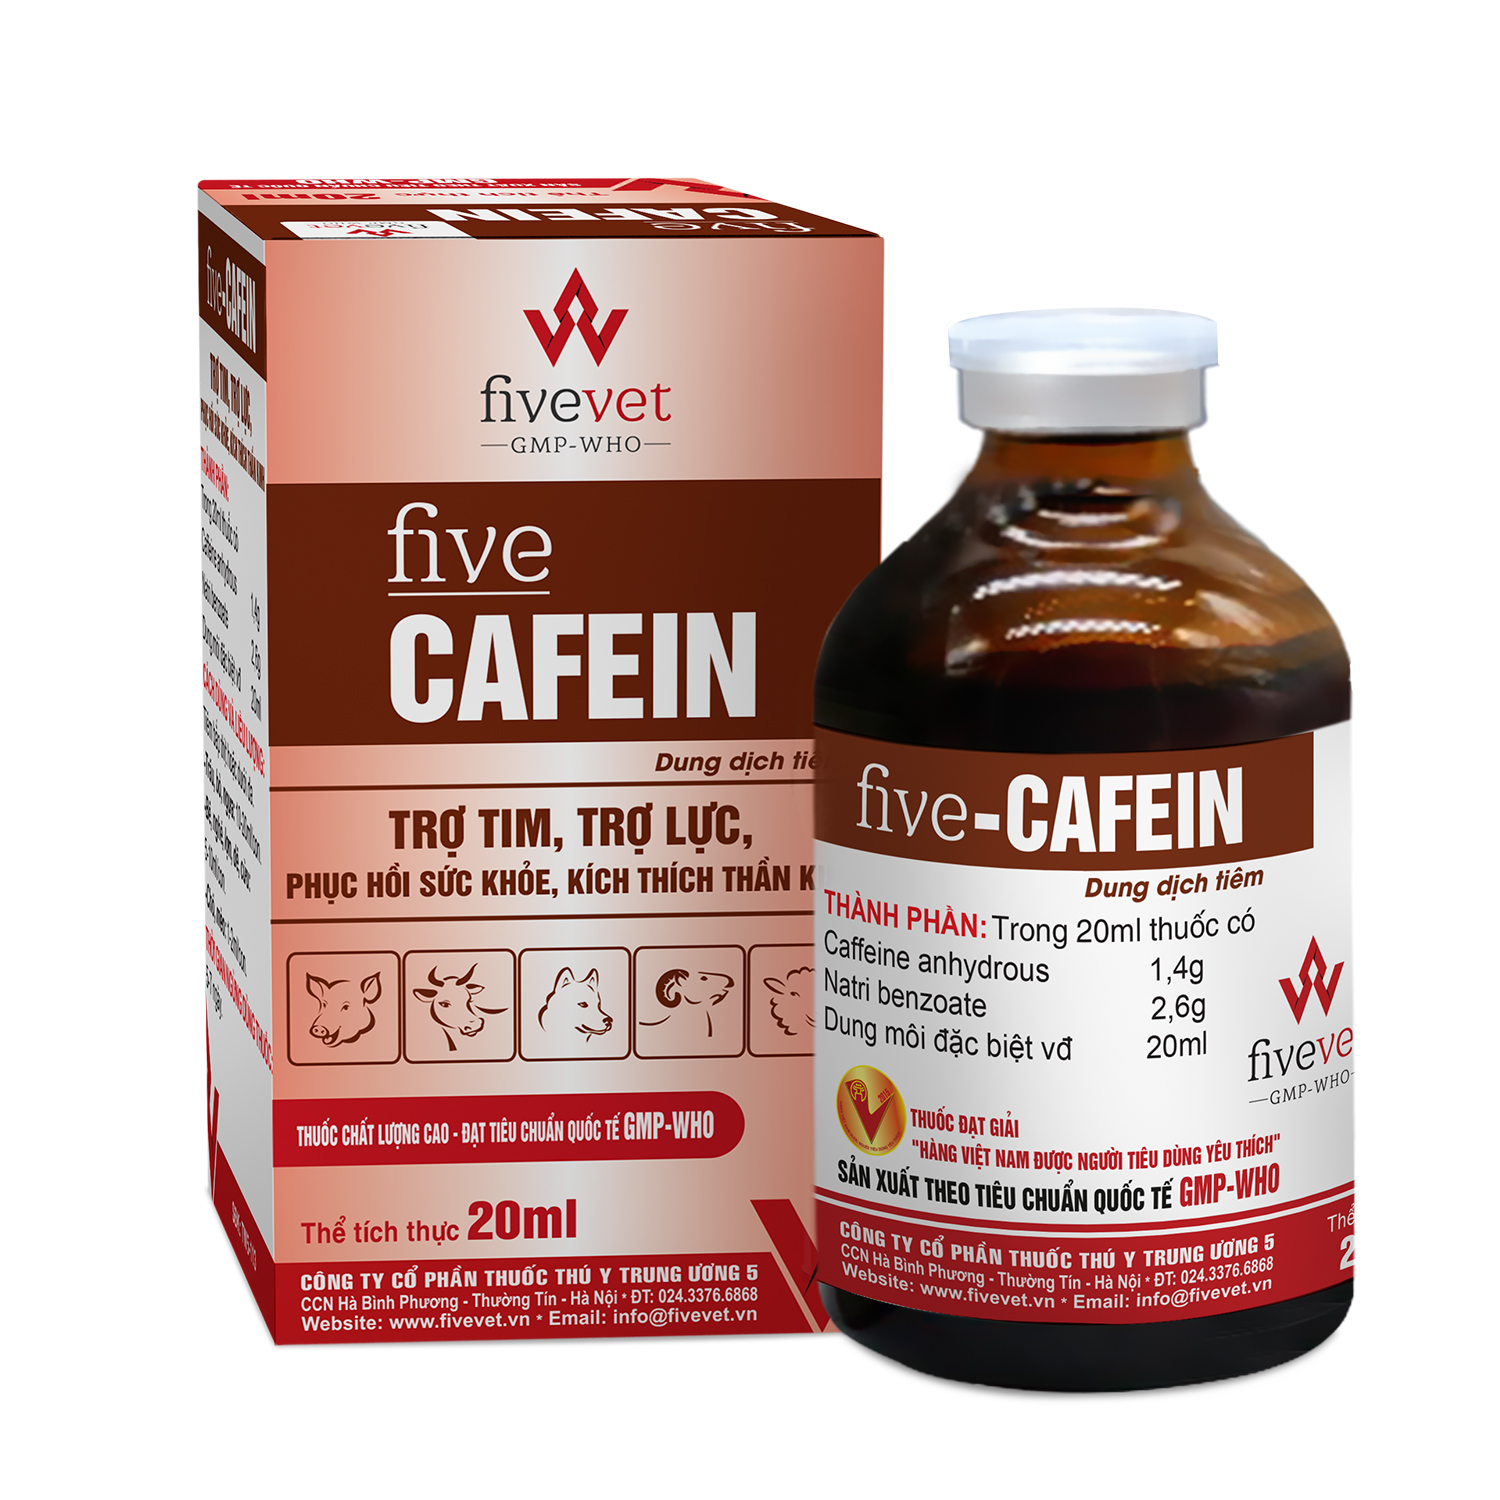 Five-Cafein